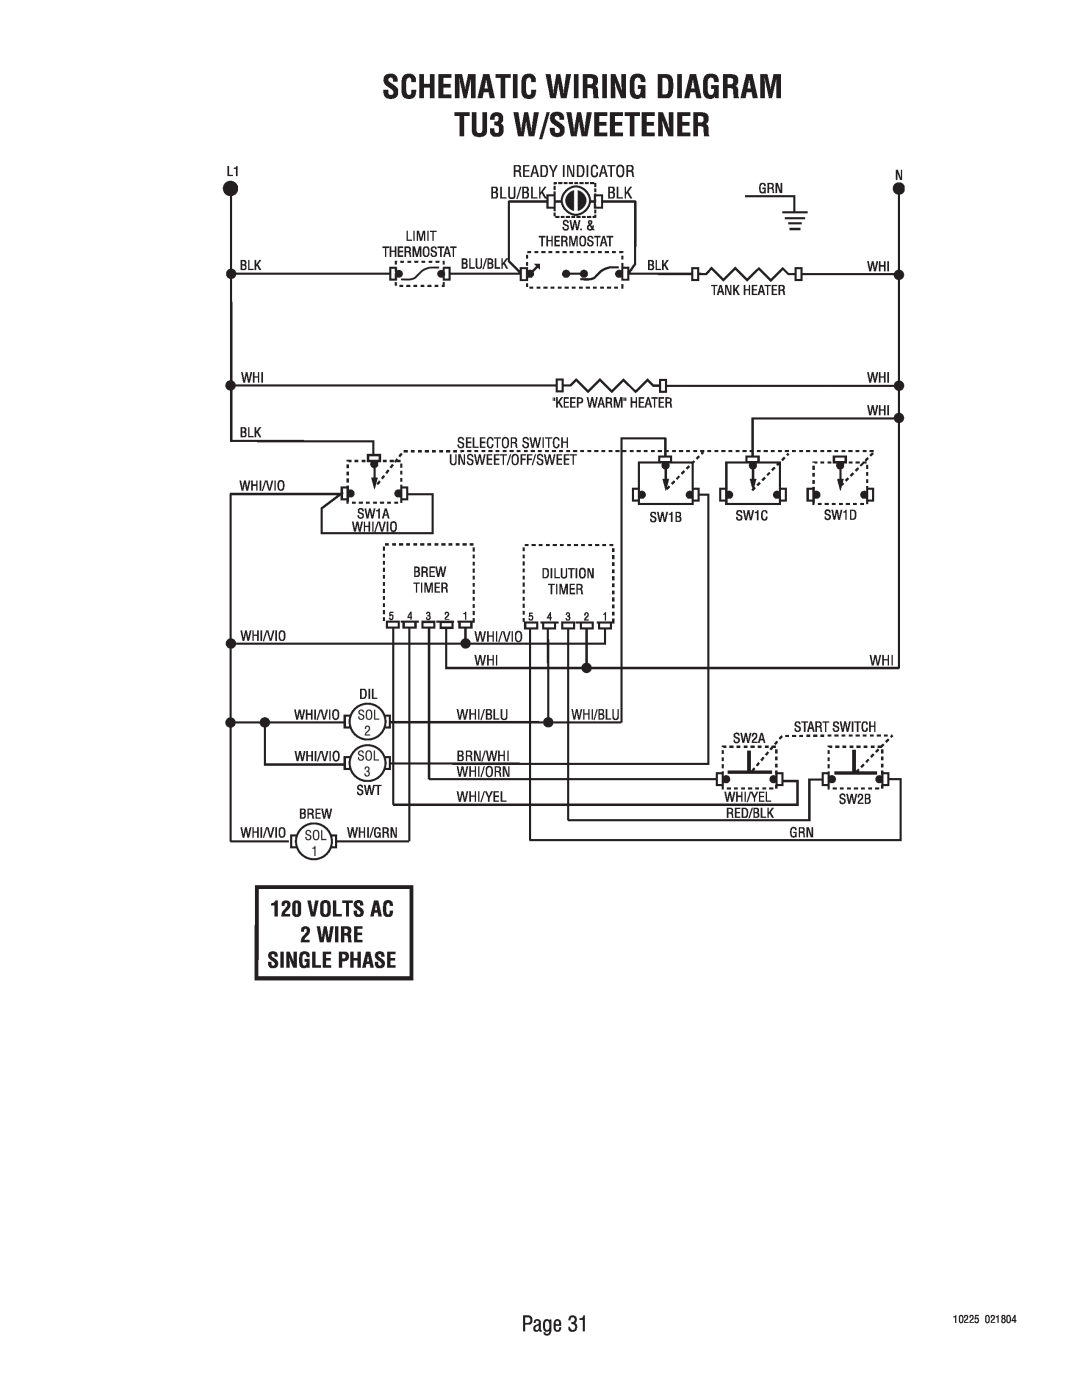 Bunn service manual SCHEMATIC WIRING DIAGRAM TU3 W/SWEETENER, Selector Switch, Unsweet/Off/Sweet, Whi/Blu, 10225, 021804 